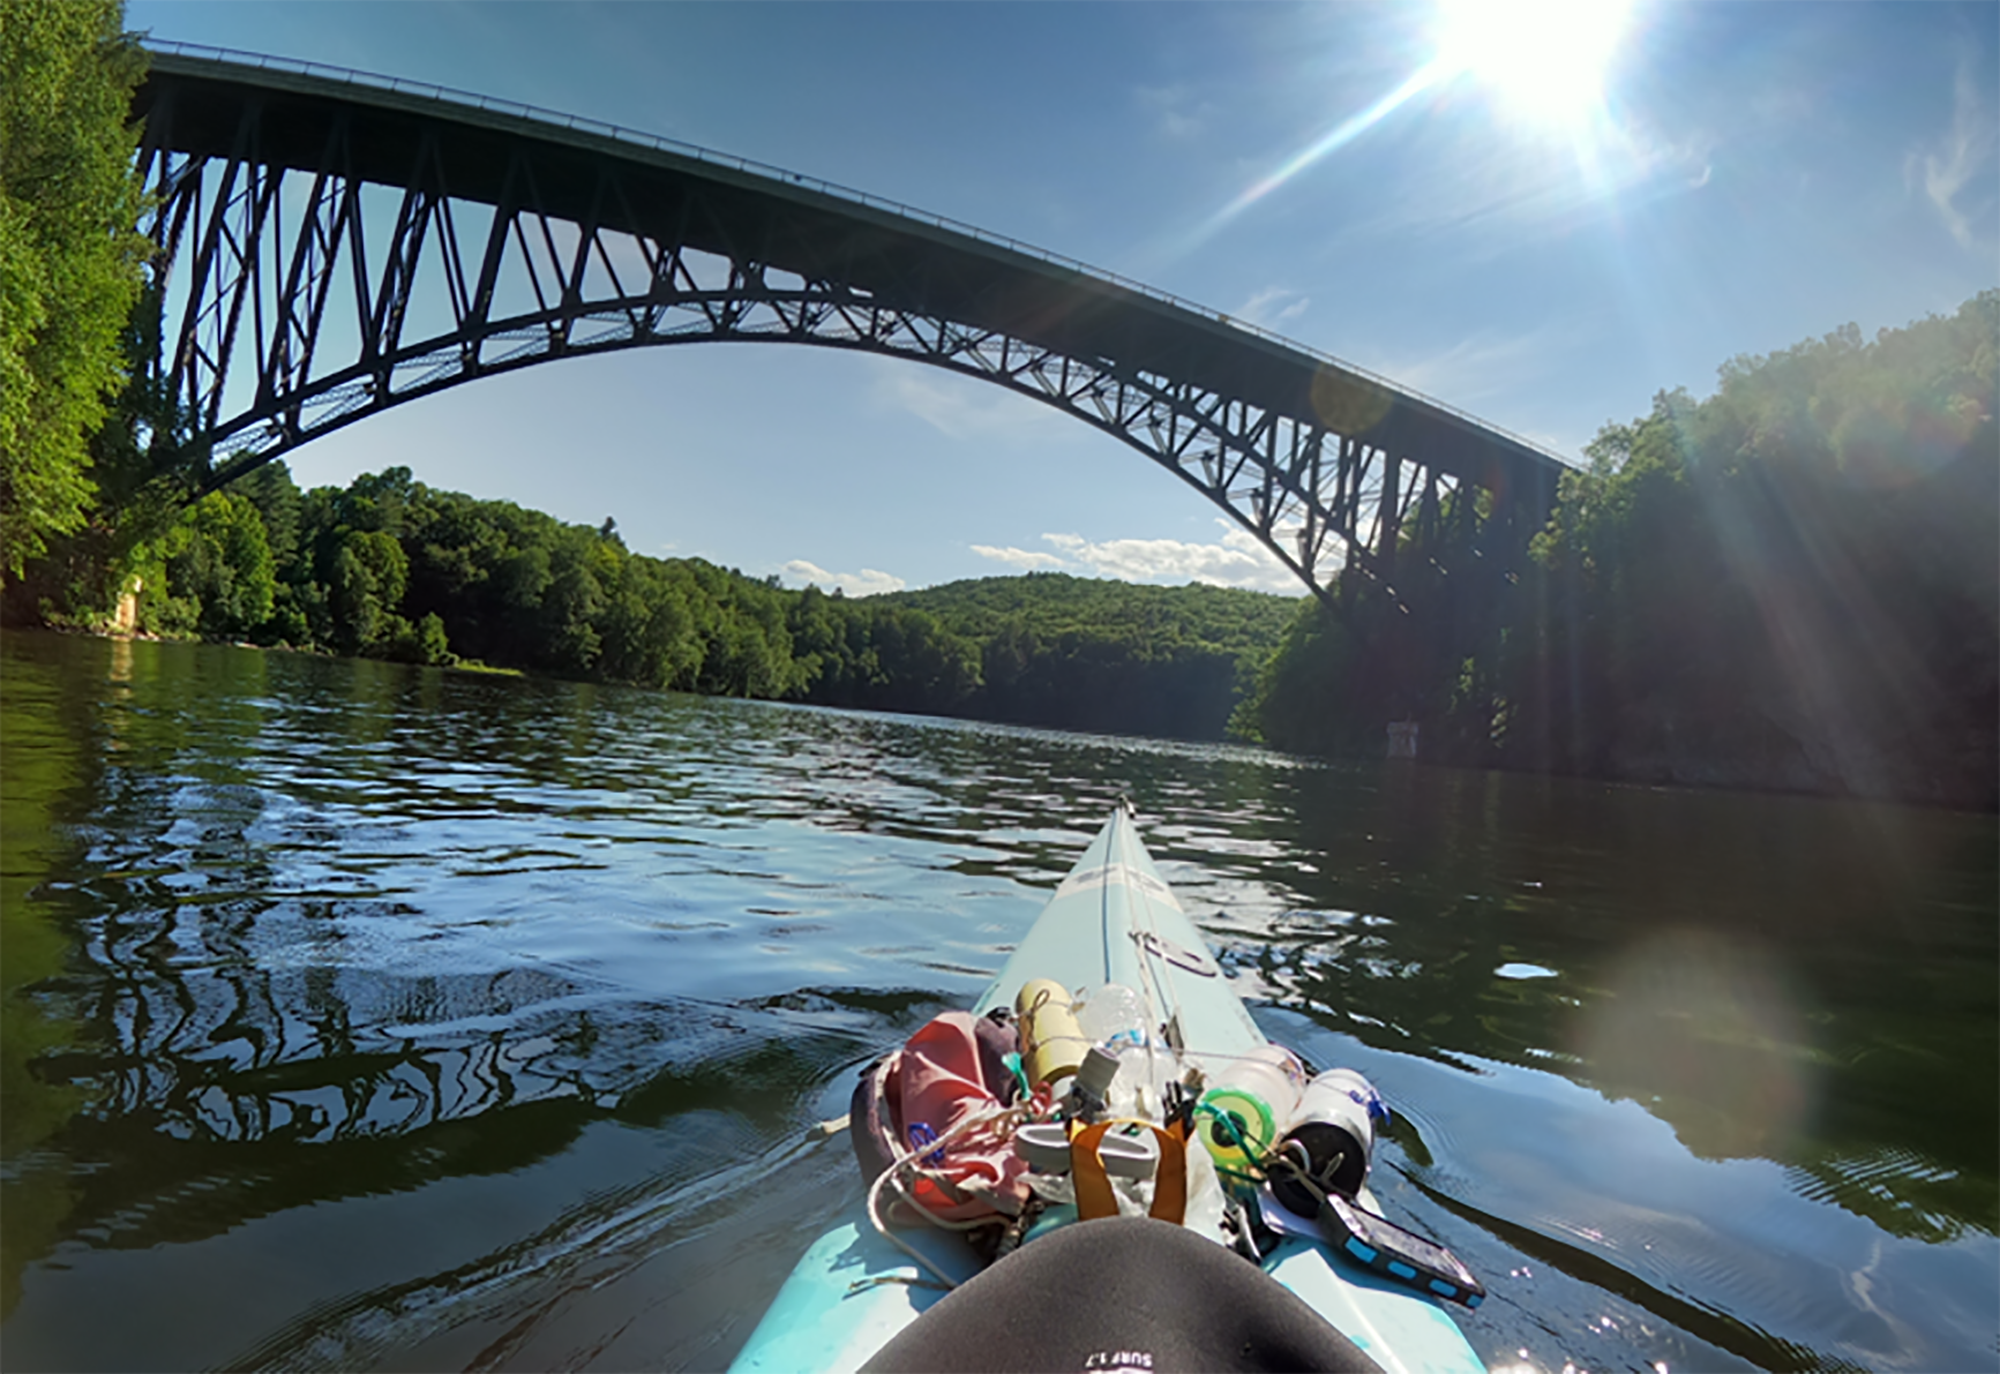 One New England Thread: An 800-mile bike and kayak trip through